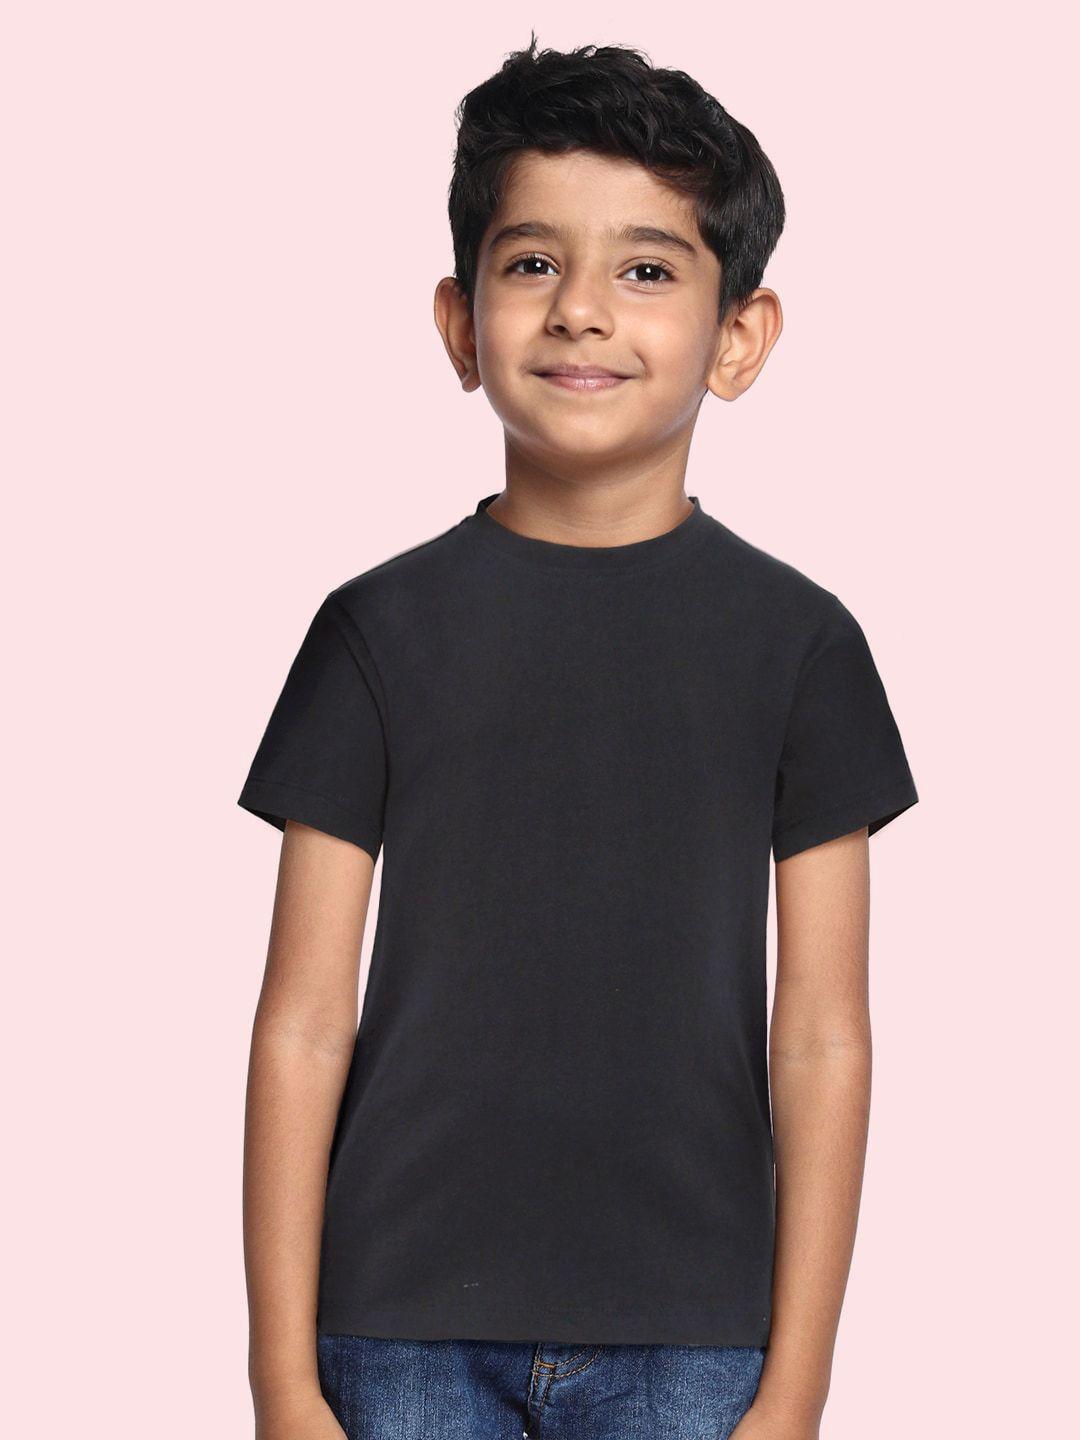 metro kids company boys black solid t-shirt